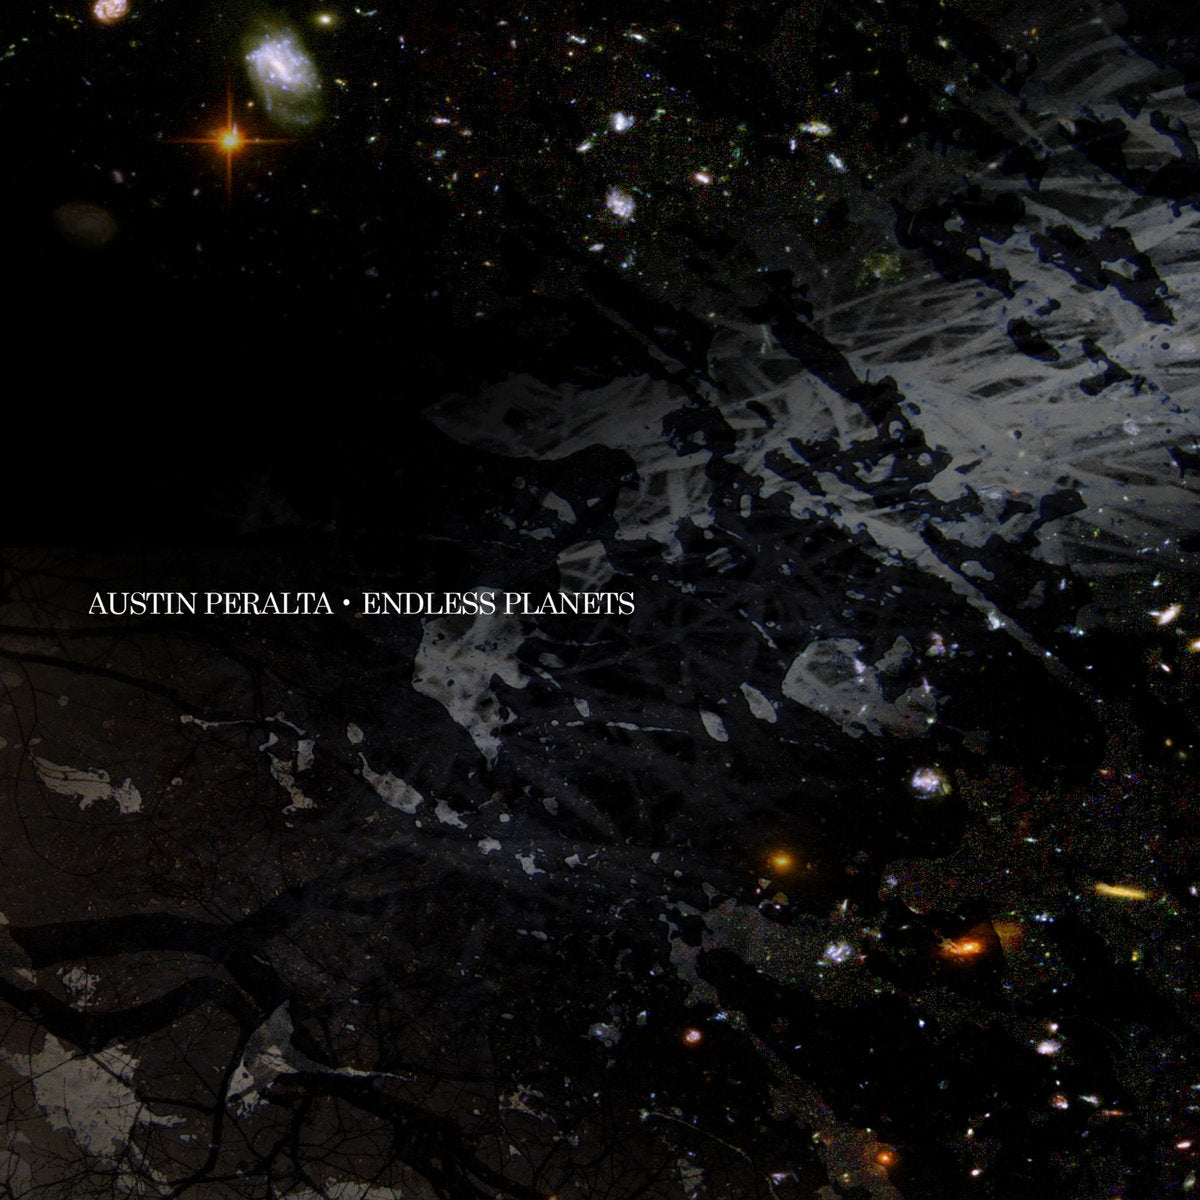 Peralta, Austin "Endless Planets" [Deluxe] 2LP